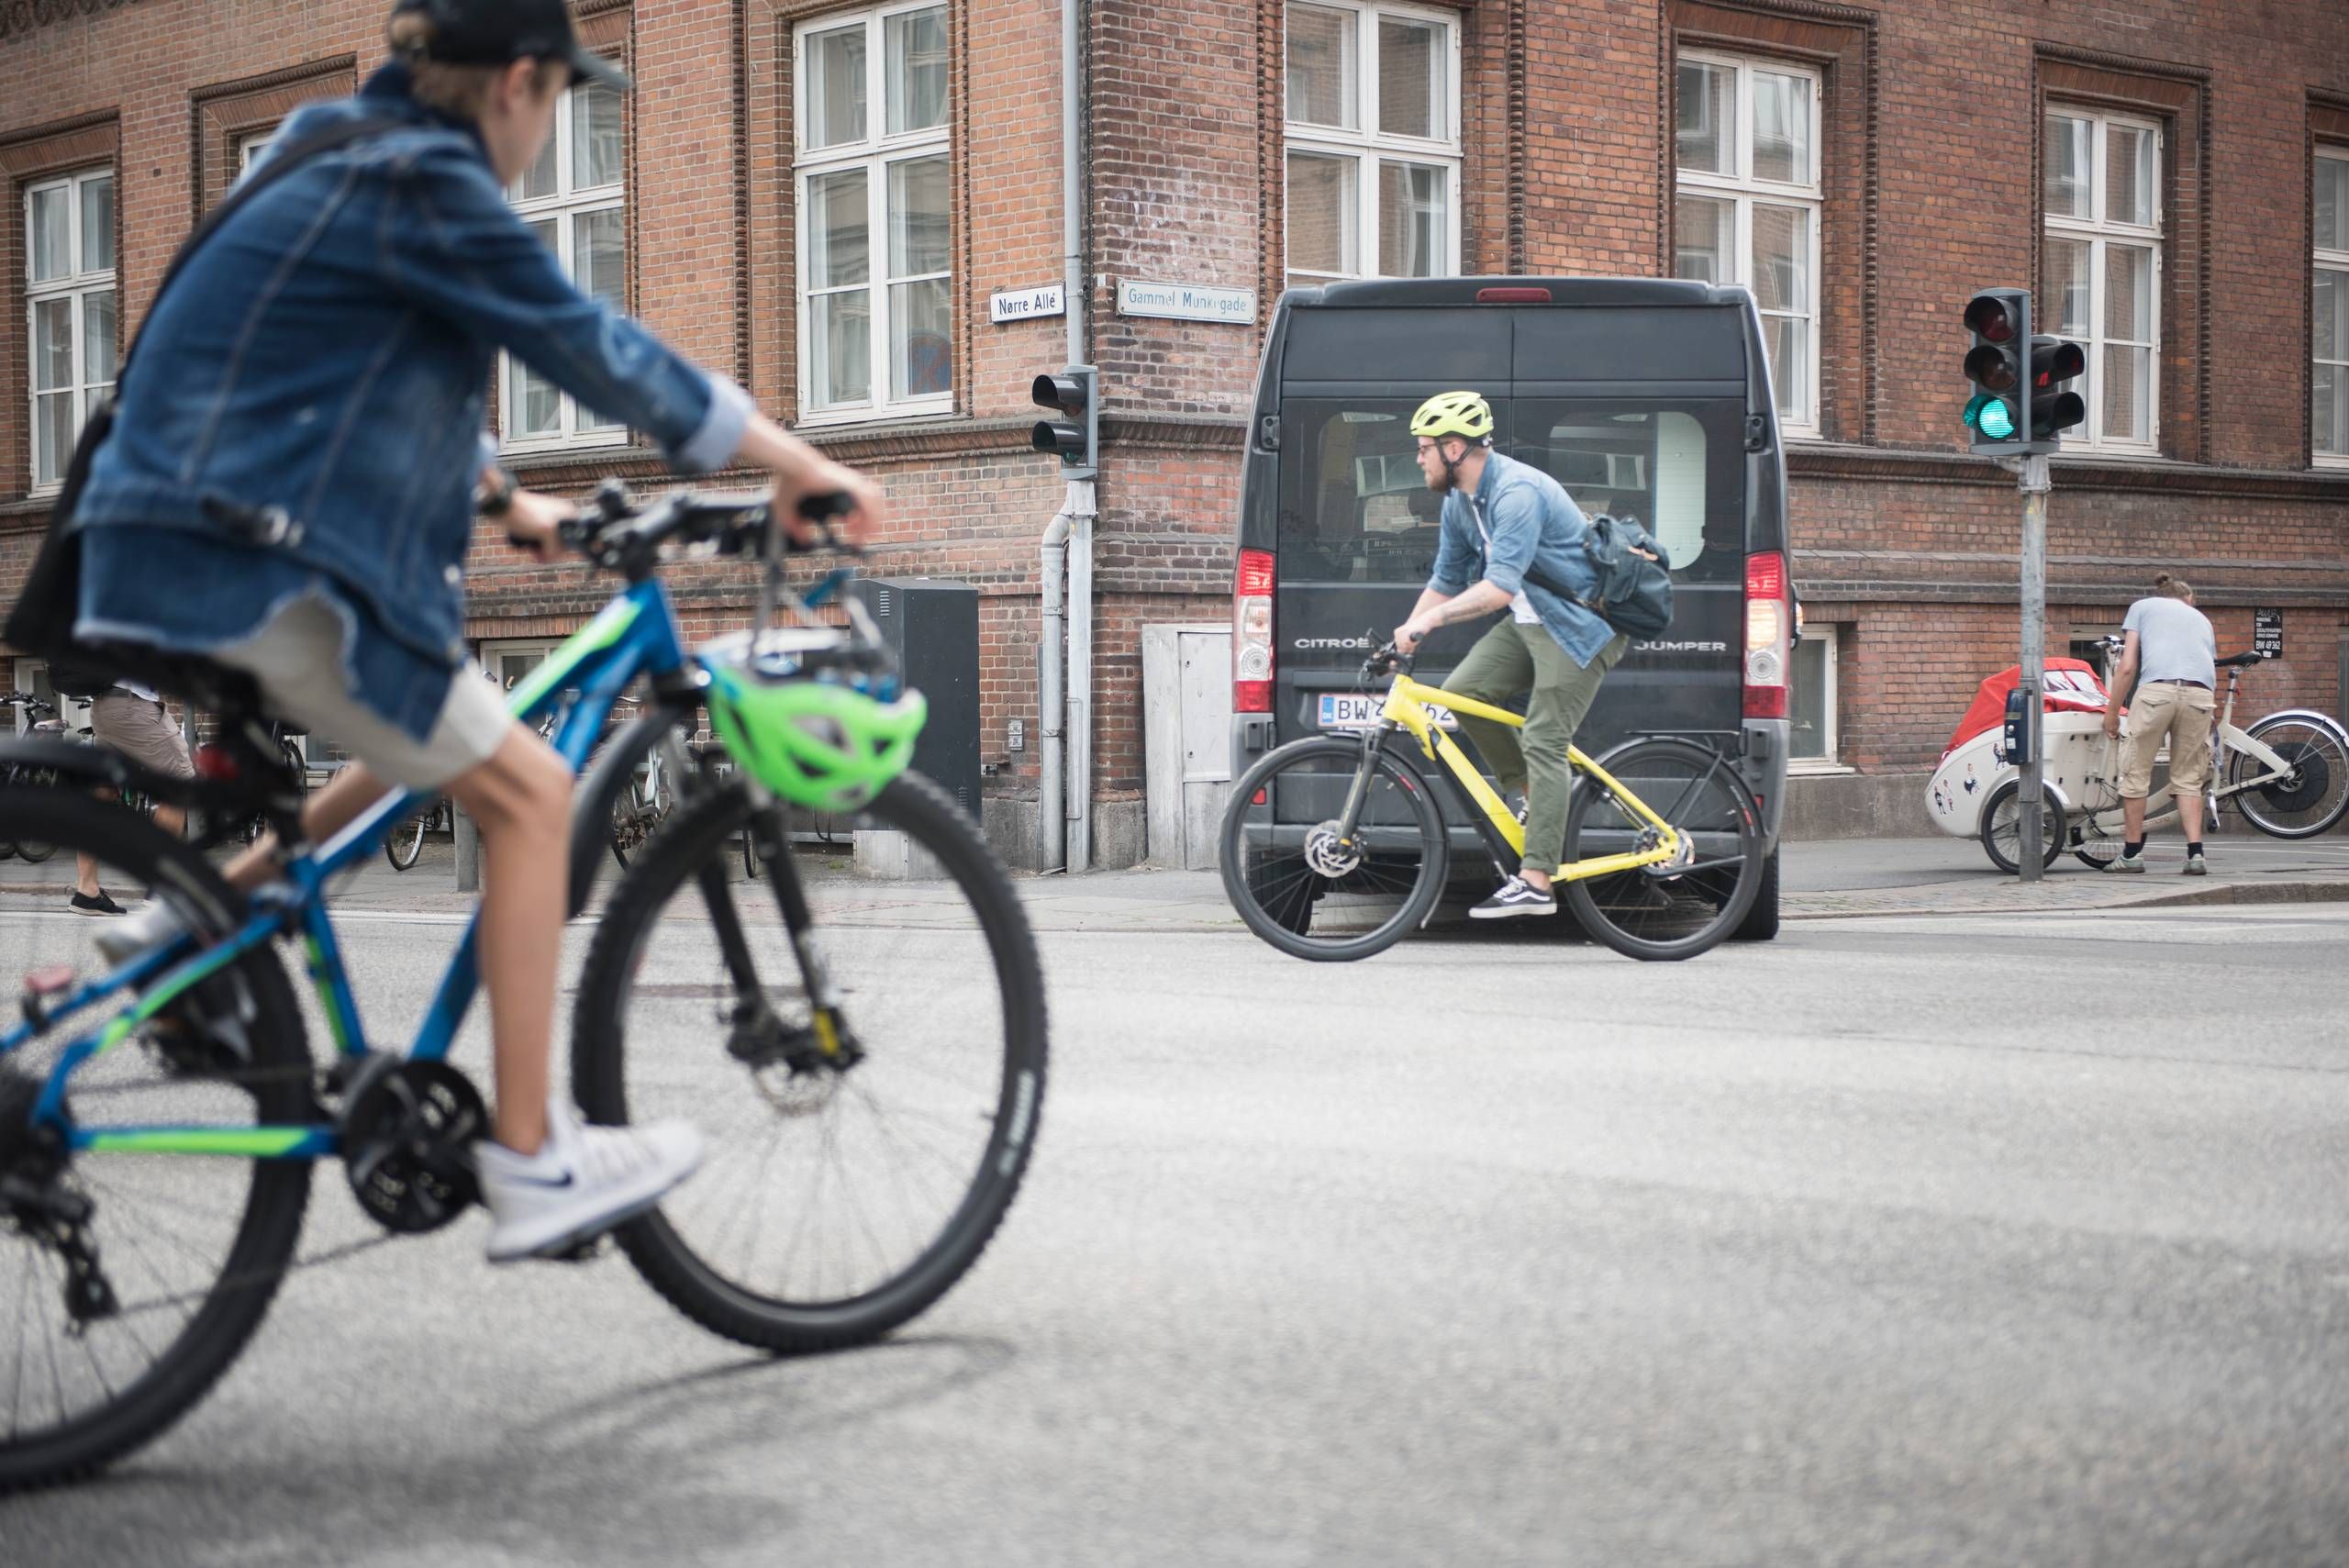 Stadig flere uheld med el-cykler: ønsker lovpligtig ansvarsforsikring